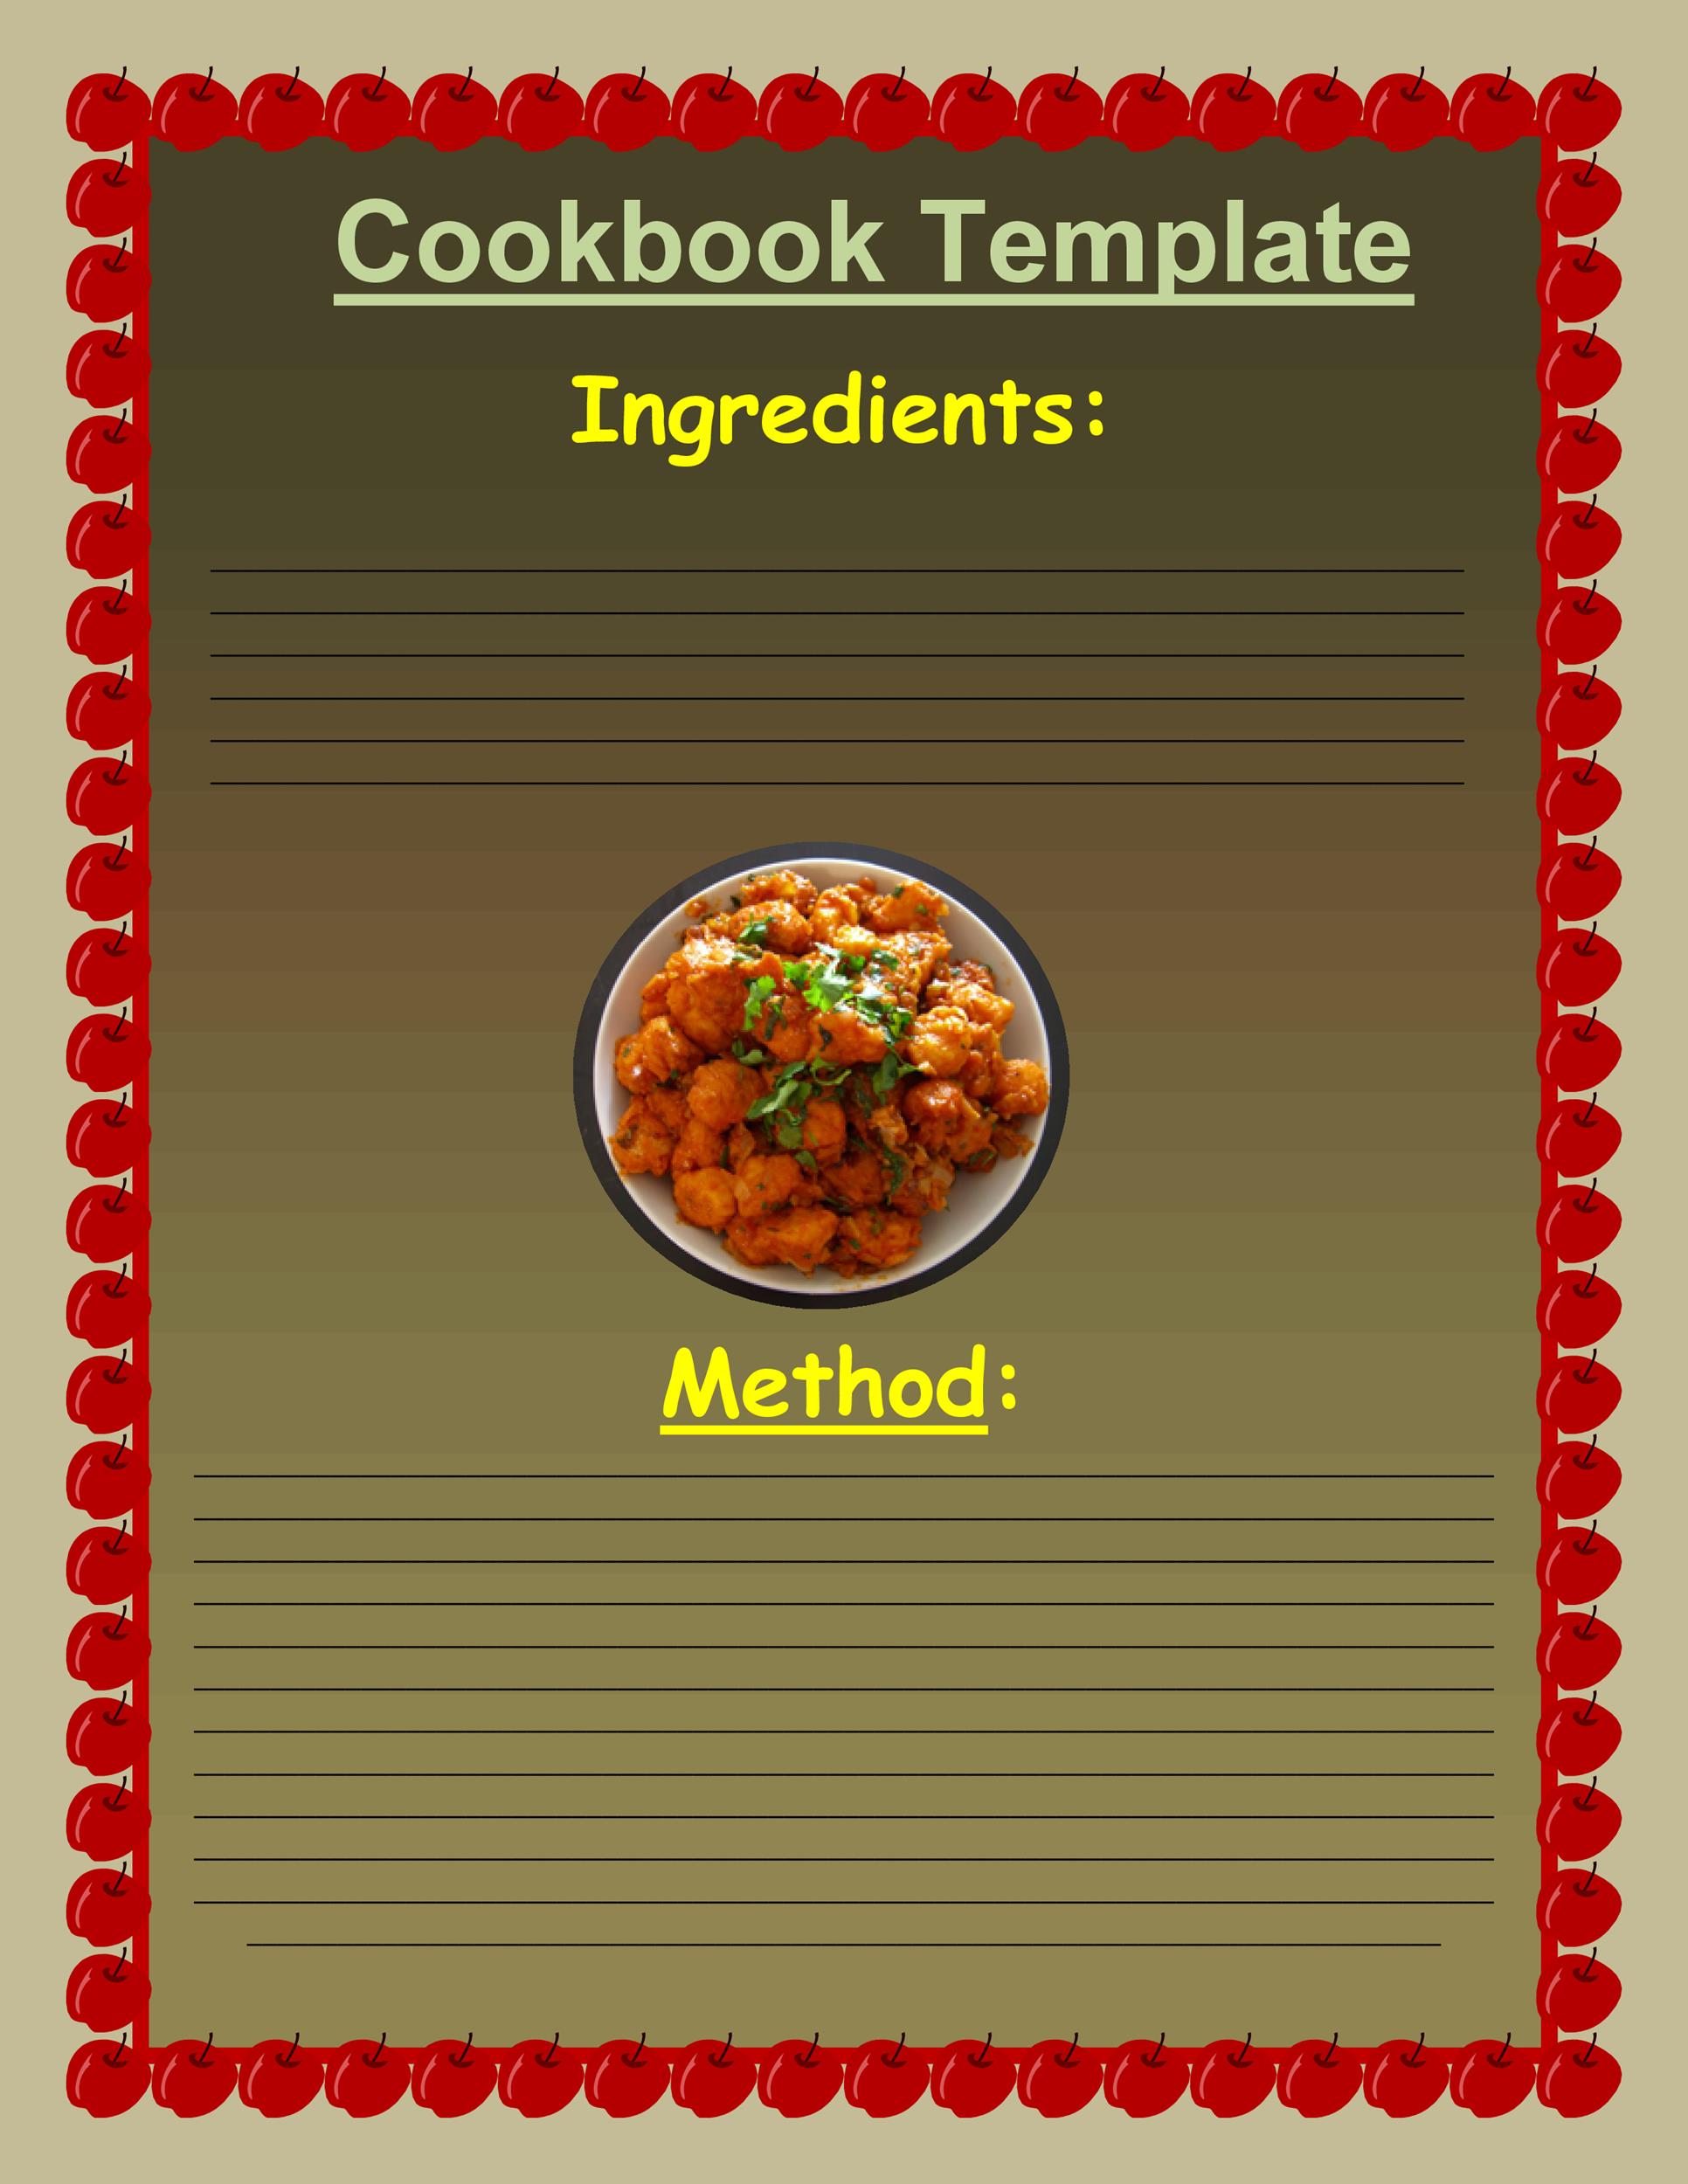 44-perfect-cookbook-templates-recipe-book-recipe-cards